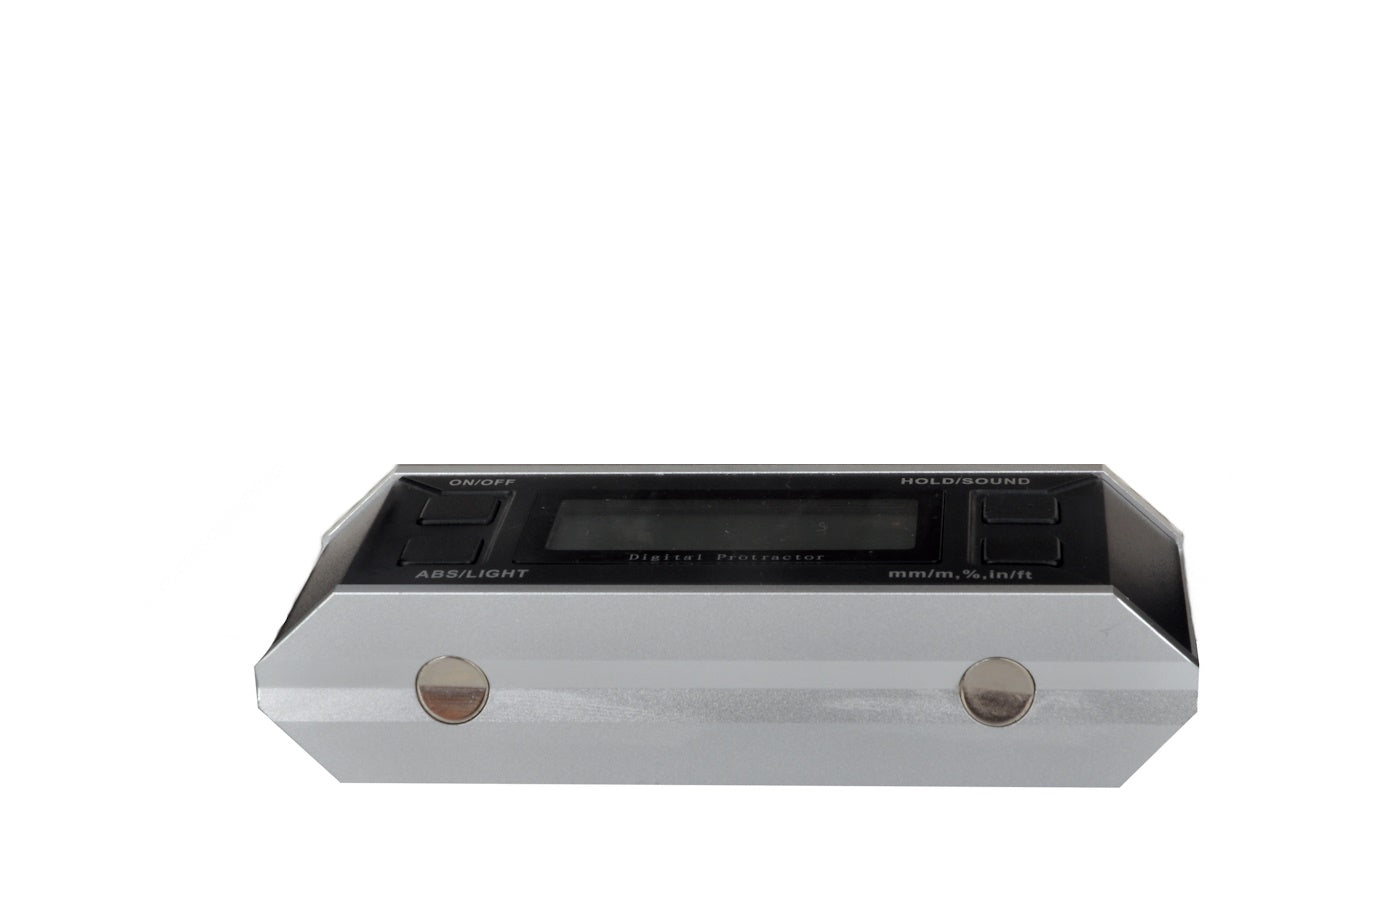 Digital Protractor Gauge Angle Level Inclinometer Magnetic Base ( 0 - 360° )